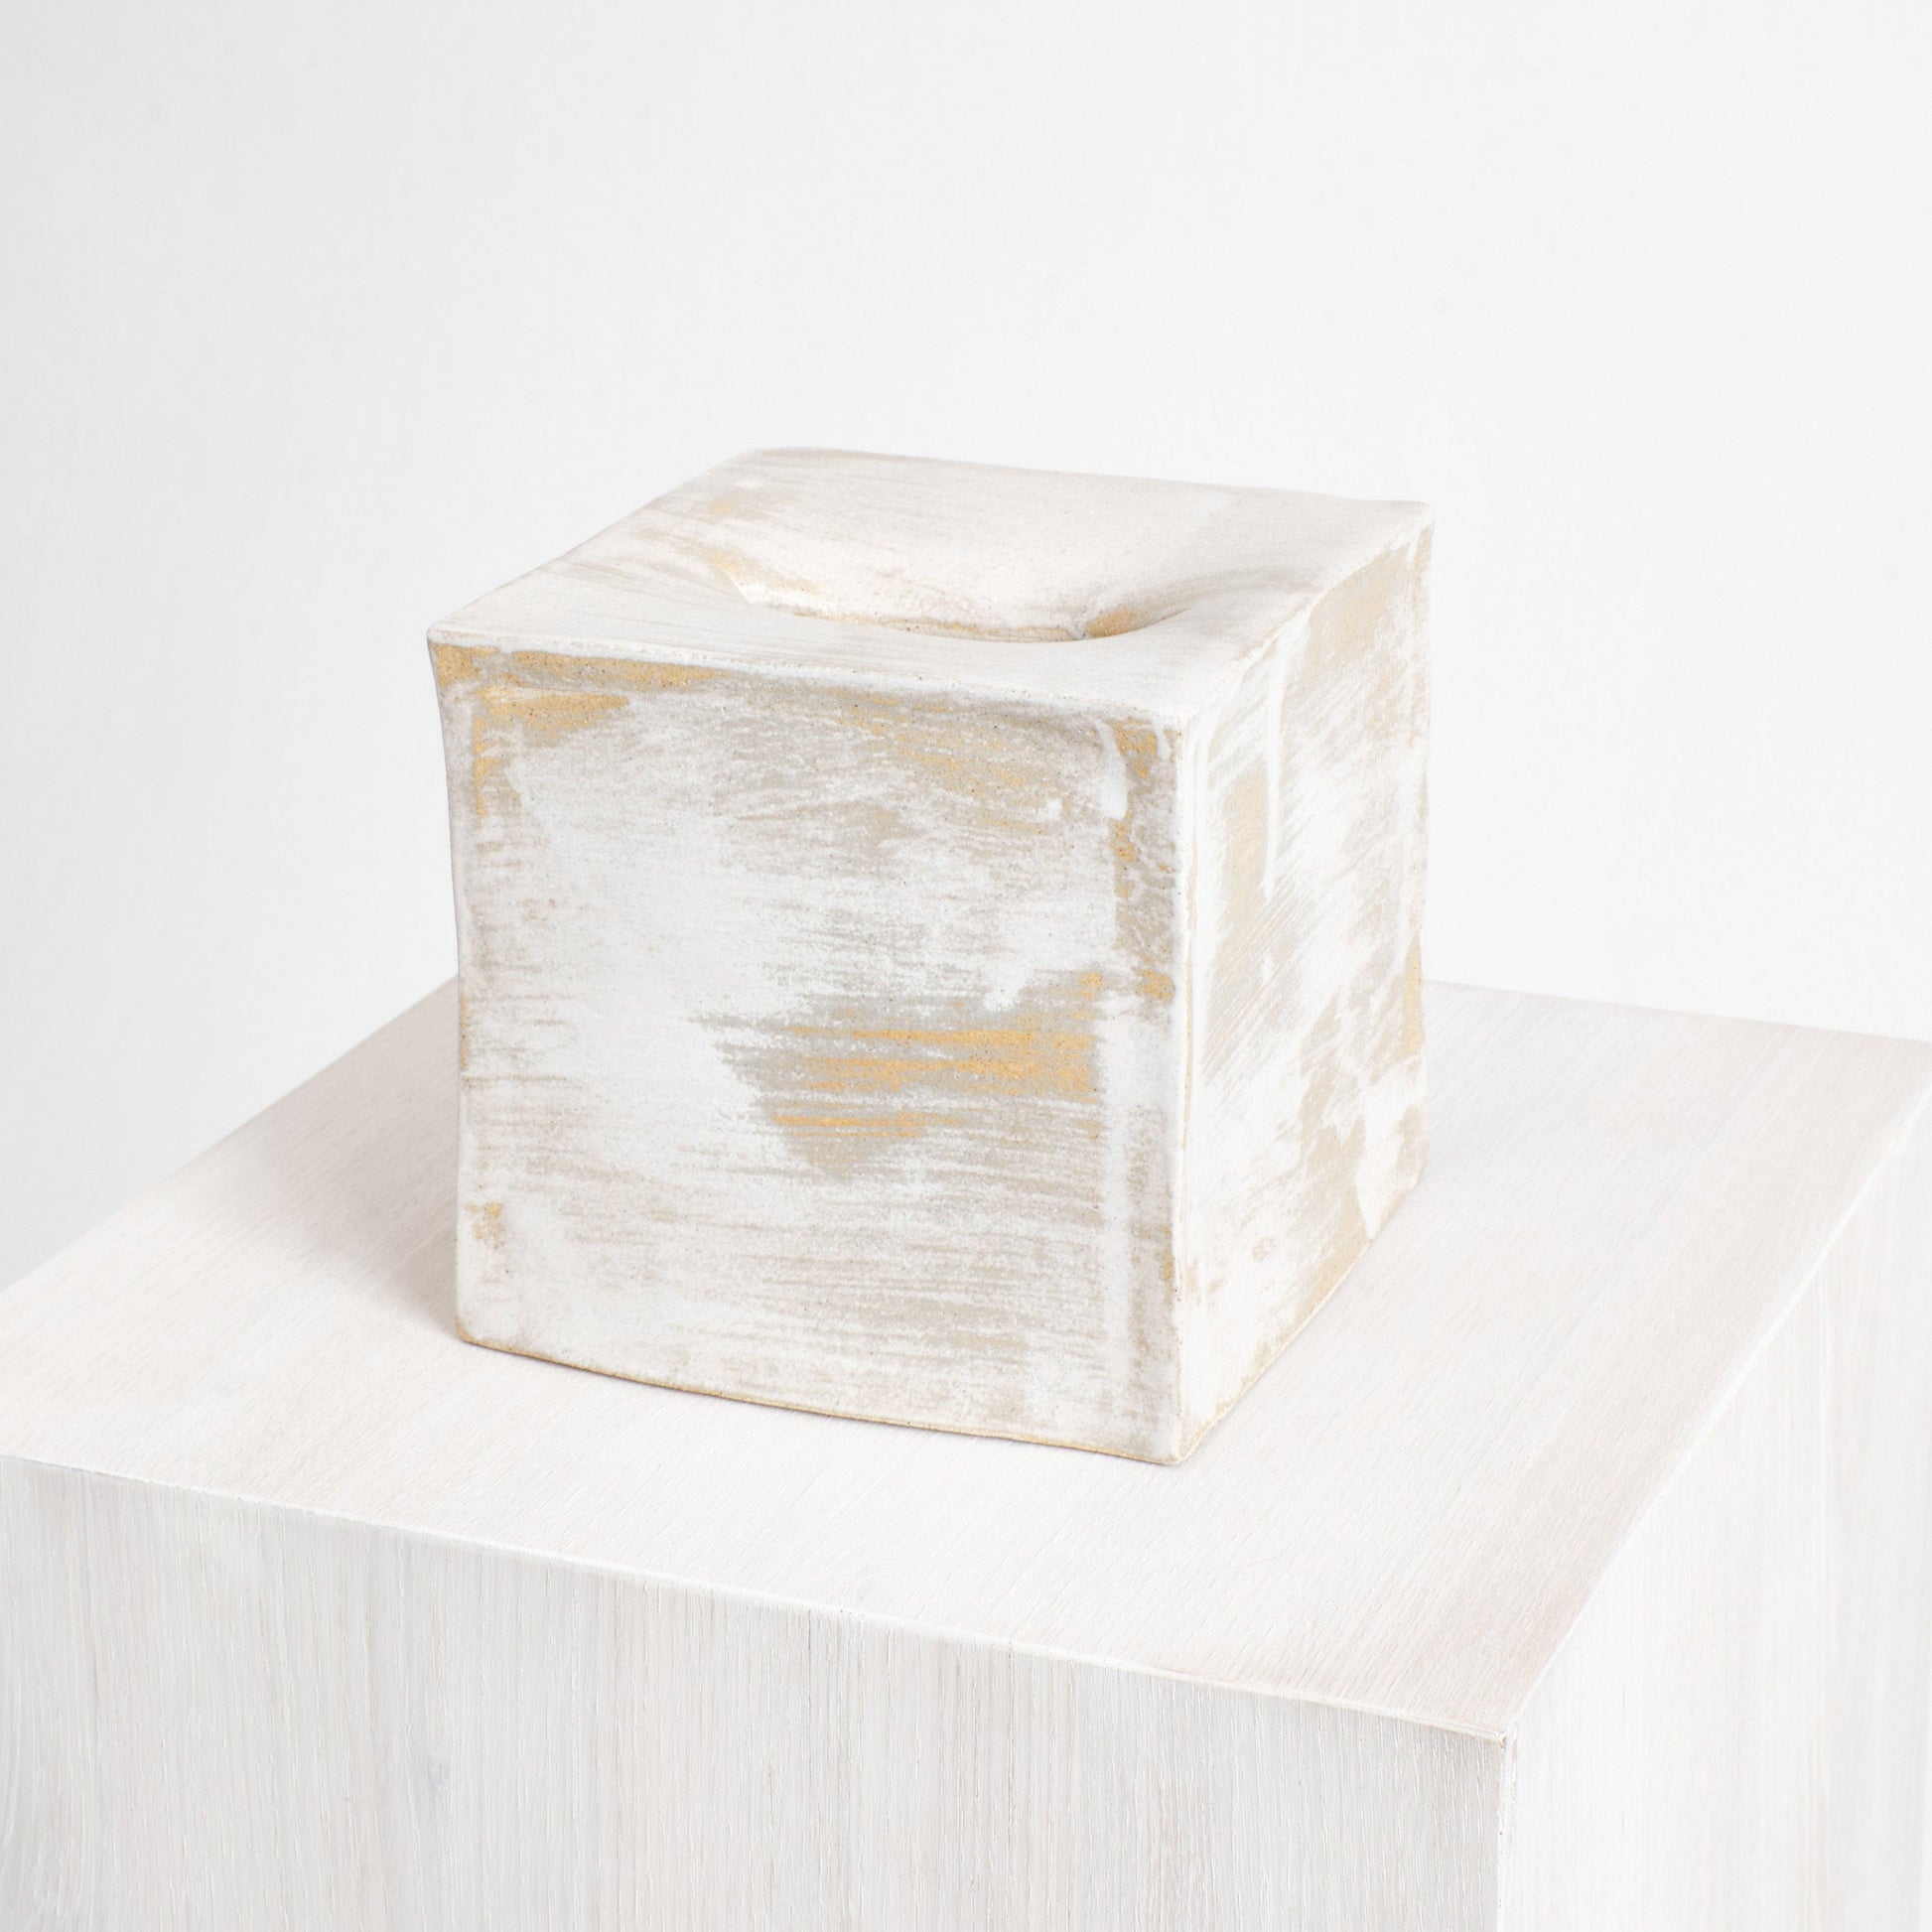 Ceramic Tissue Box - Square in Brushed White Bath